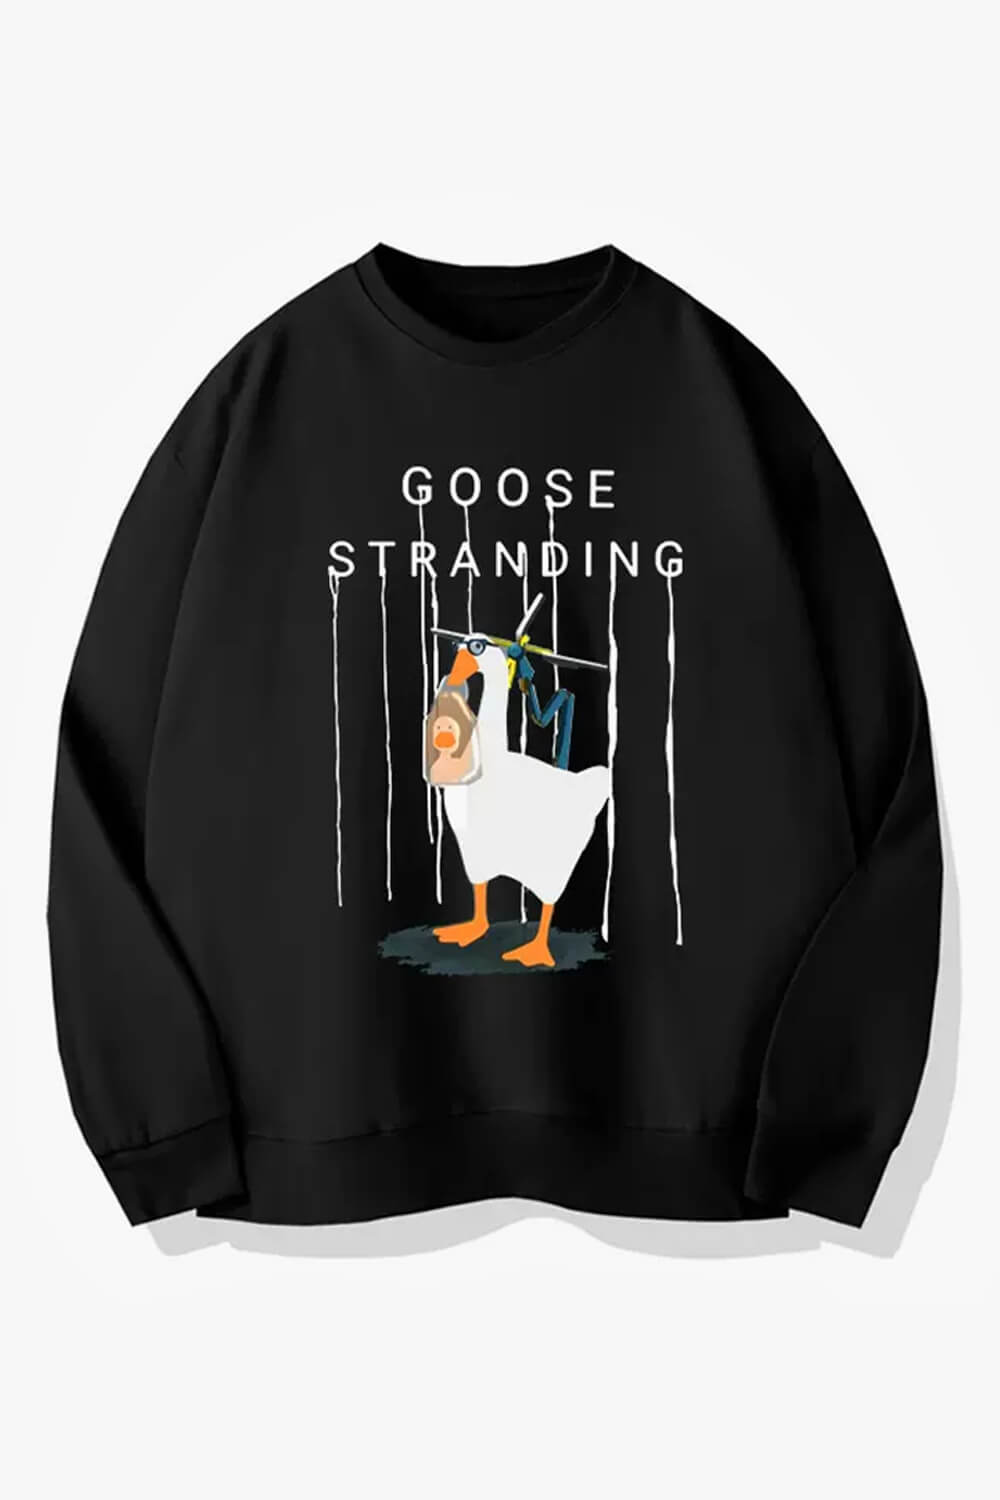 Goose Stranding Sweatshirt Gamer Aesthetic